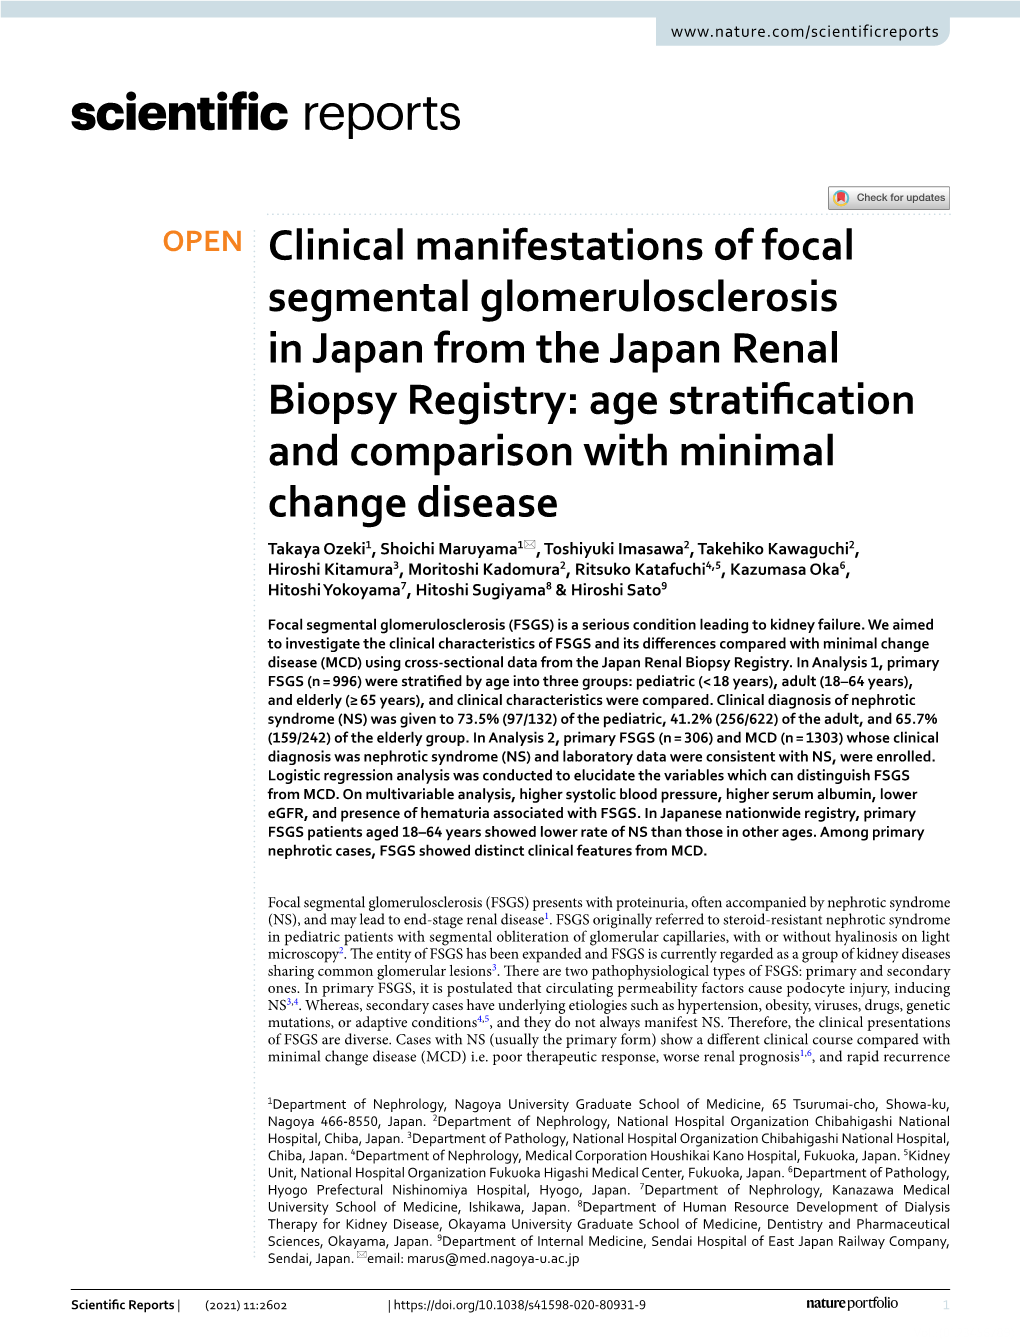 Clinical Manifestations of Focal Segmental